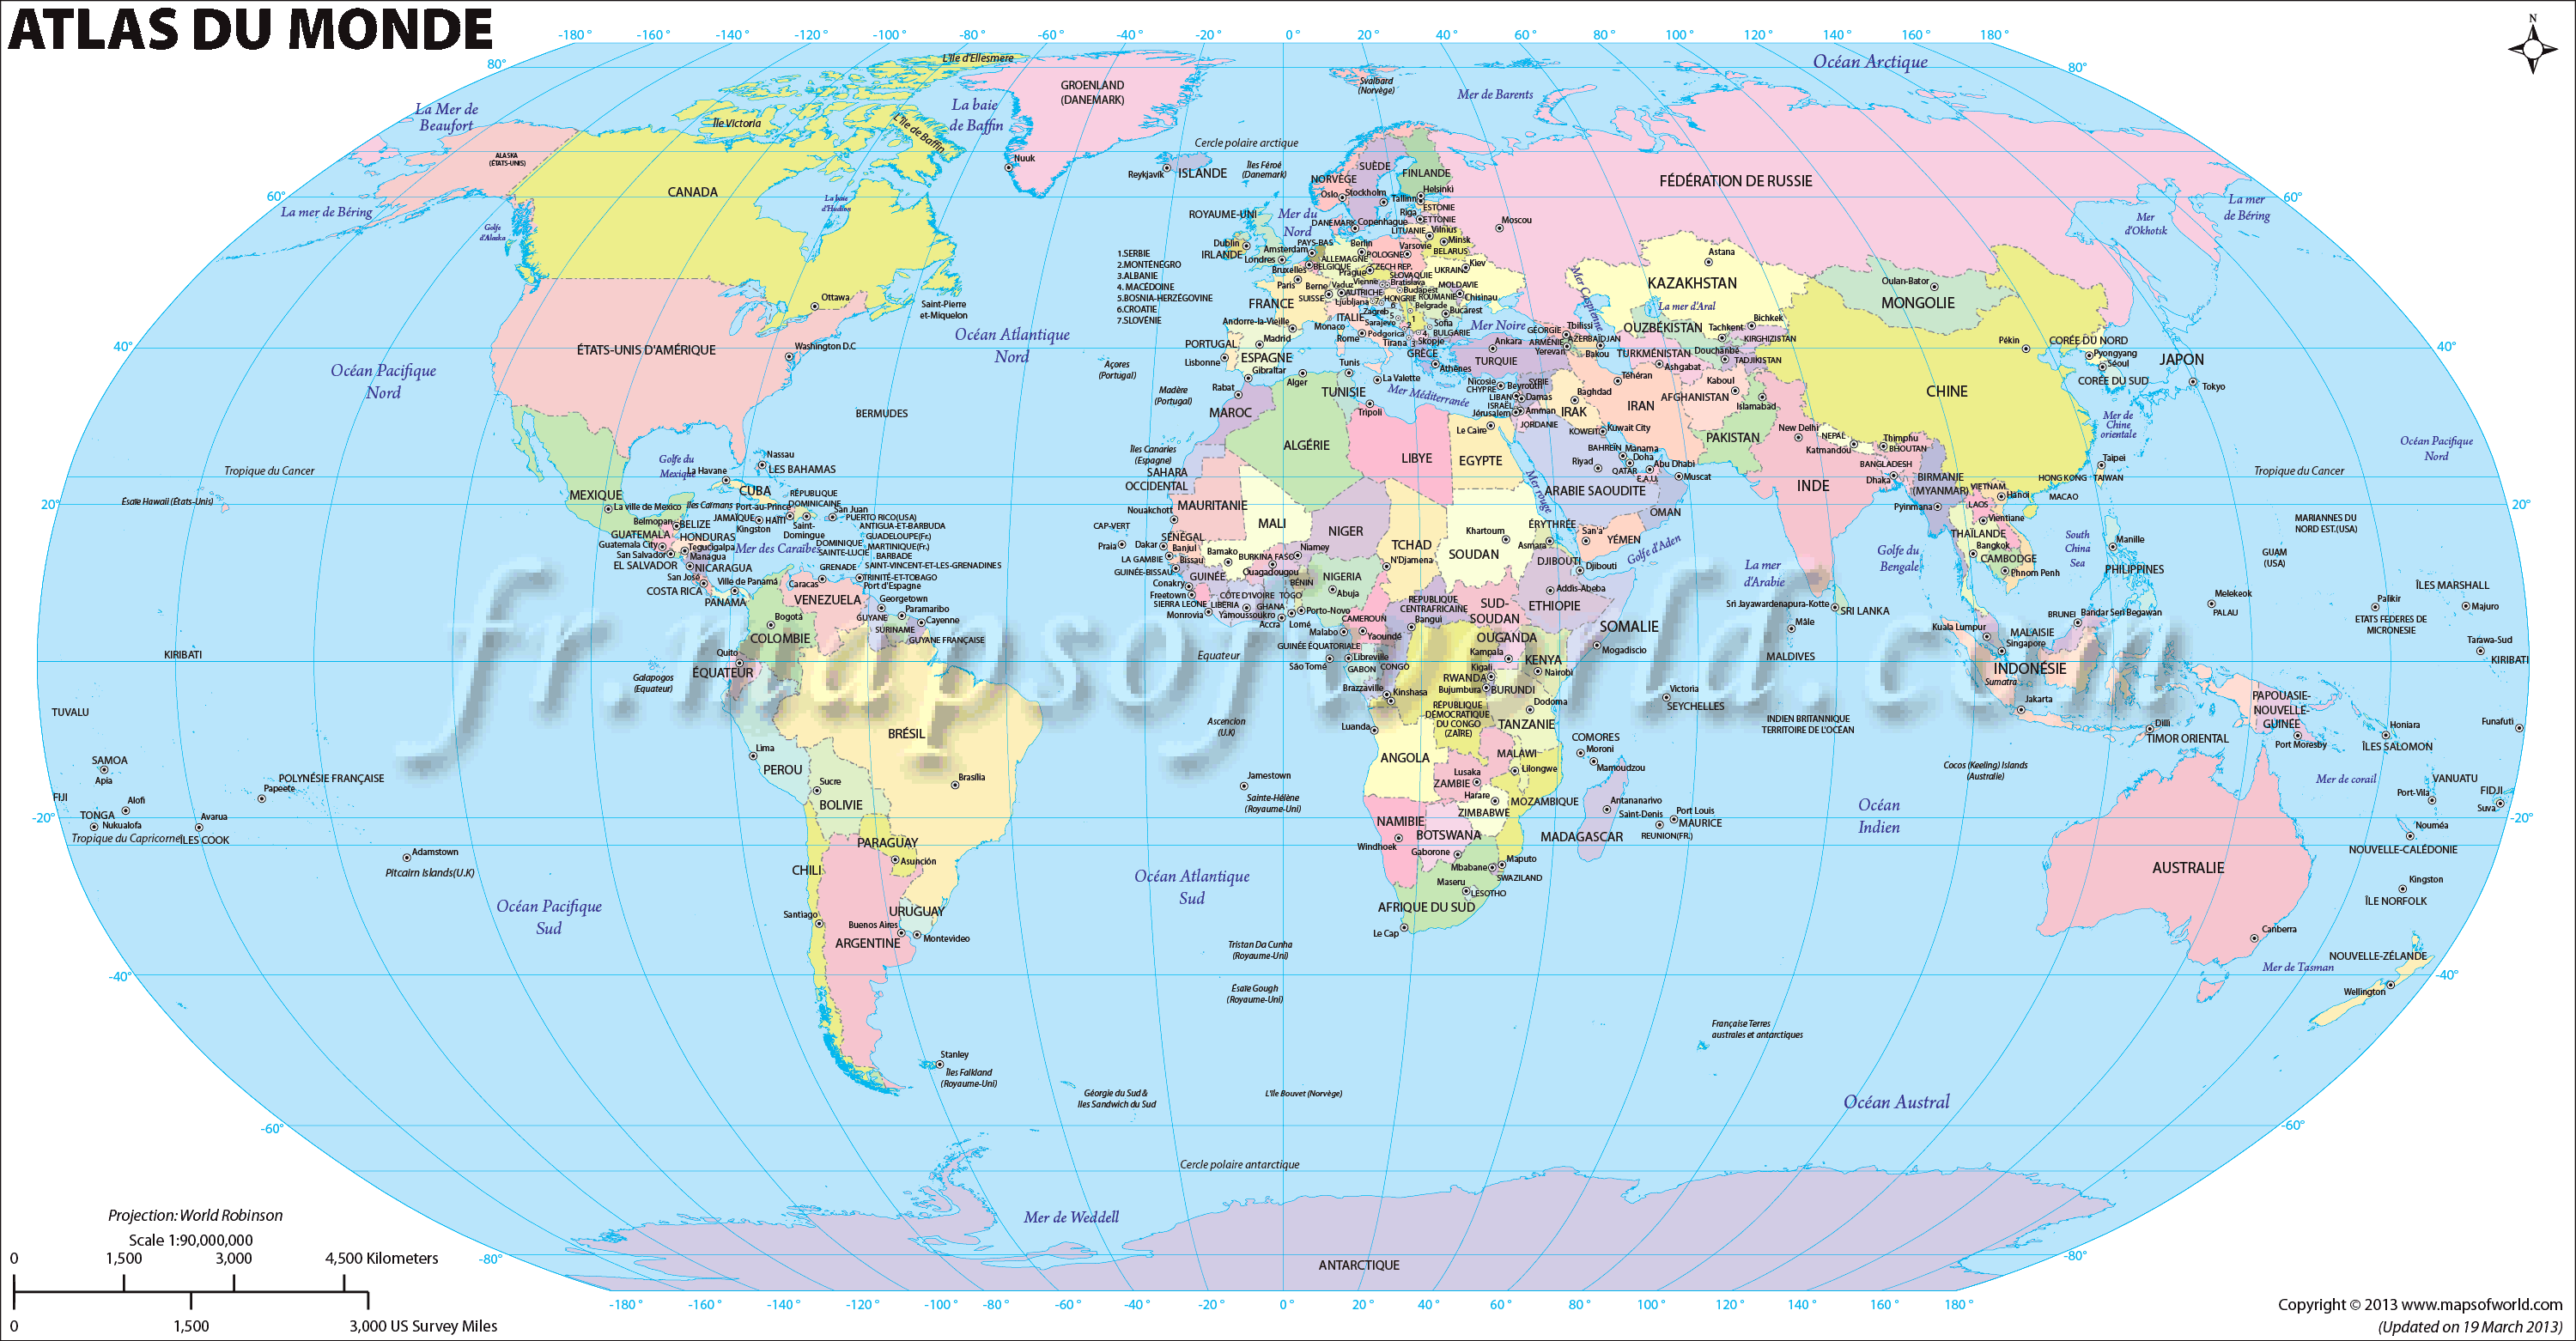 atlas mondial